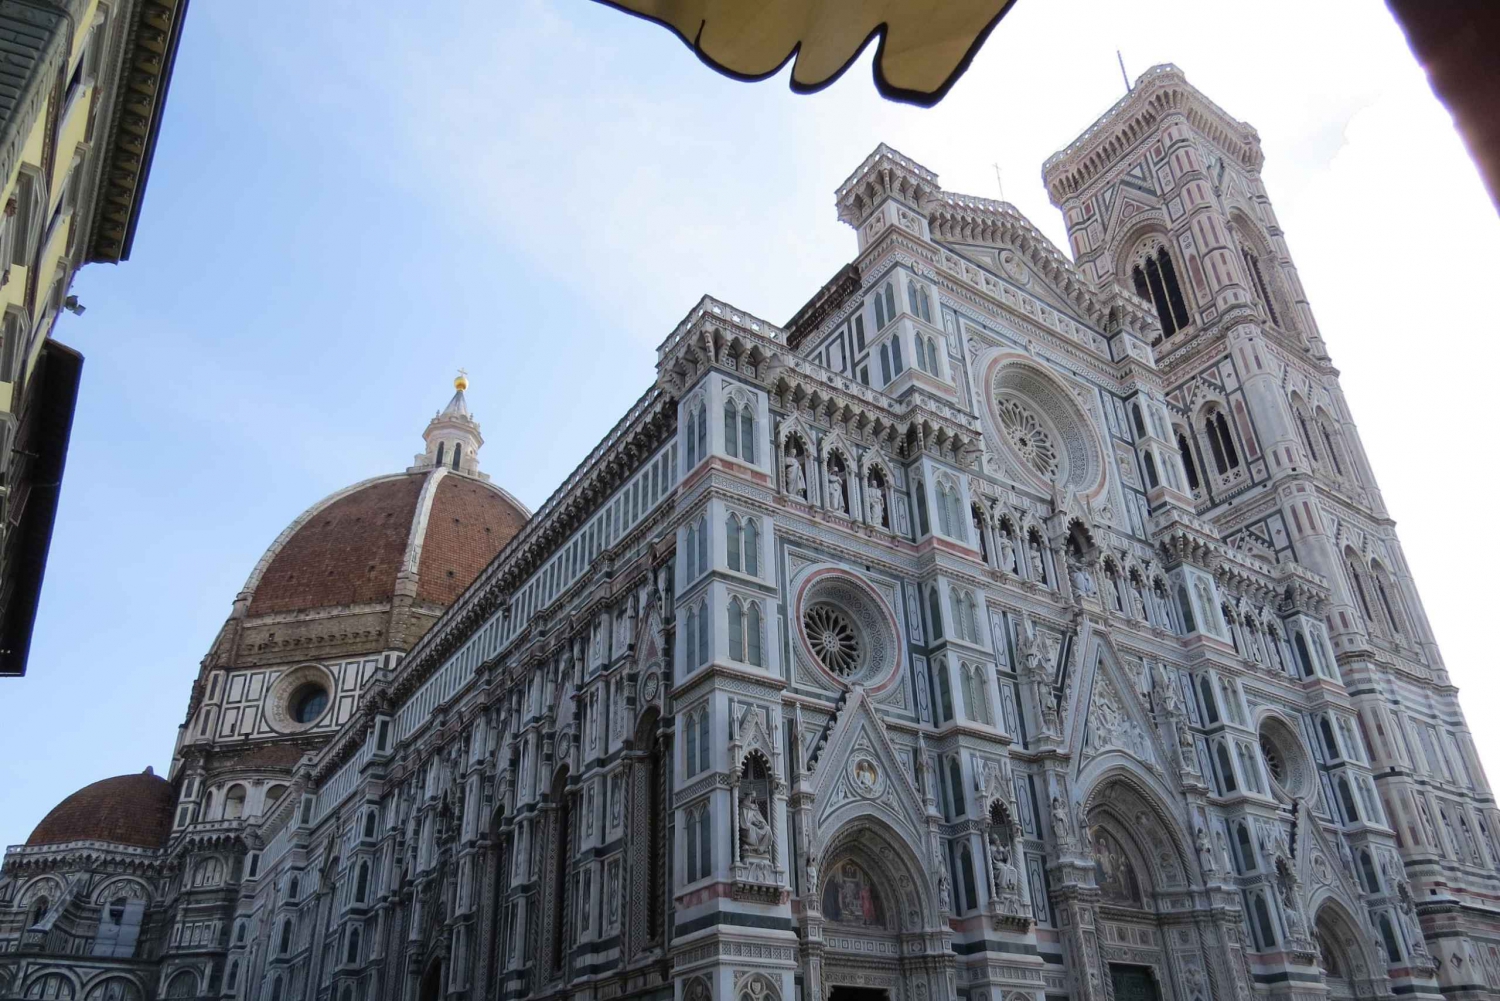 Florence: Medici’s Mile Tour and Entrance to Boboli Gardens